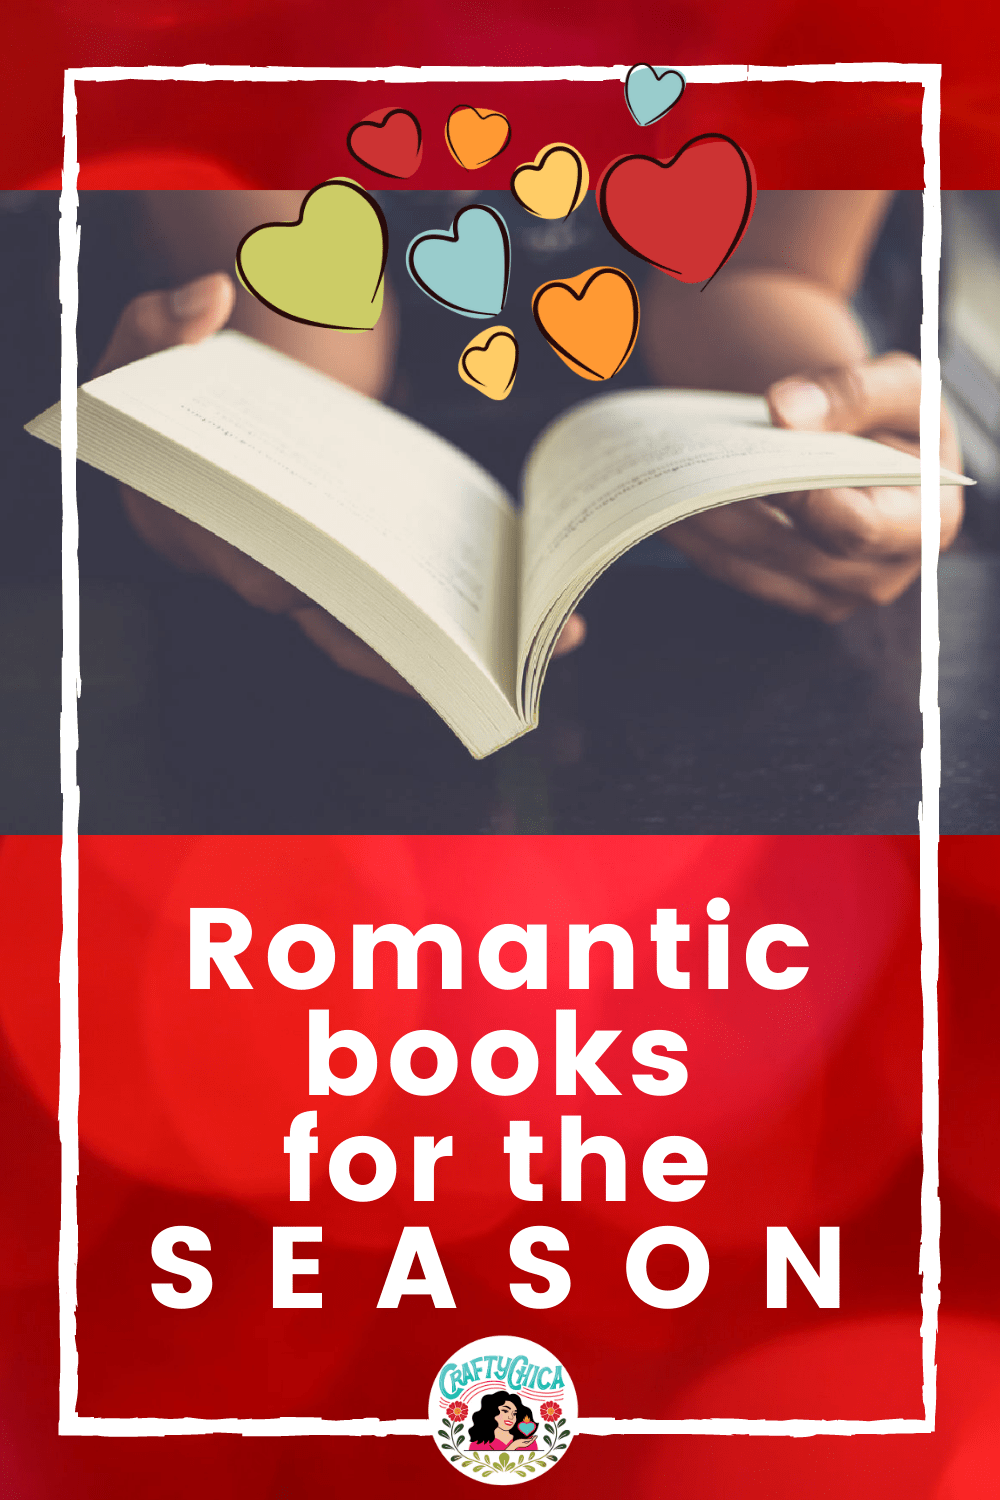 Romantic books to read